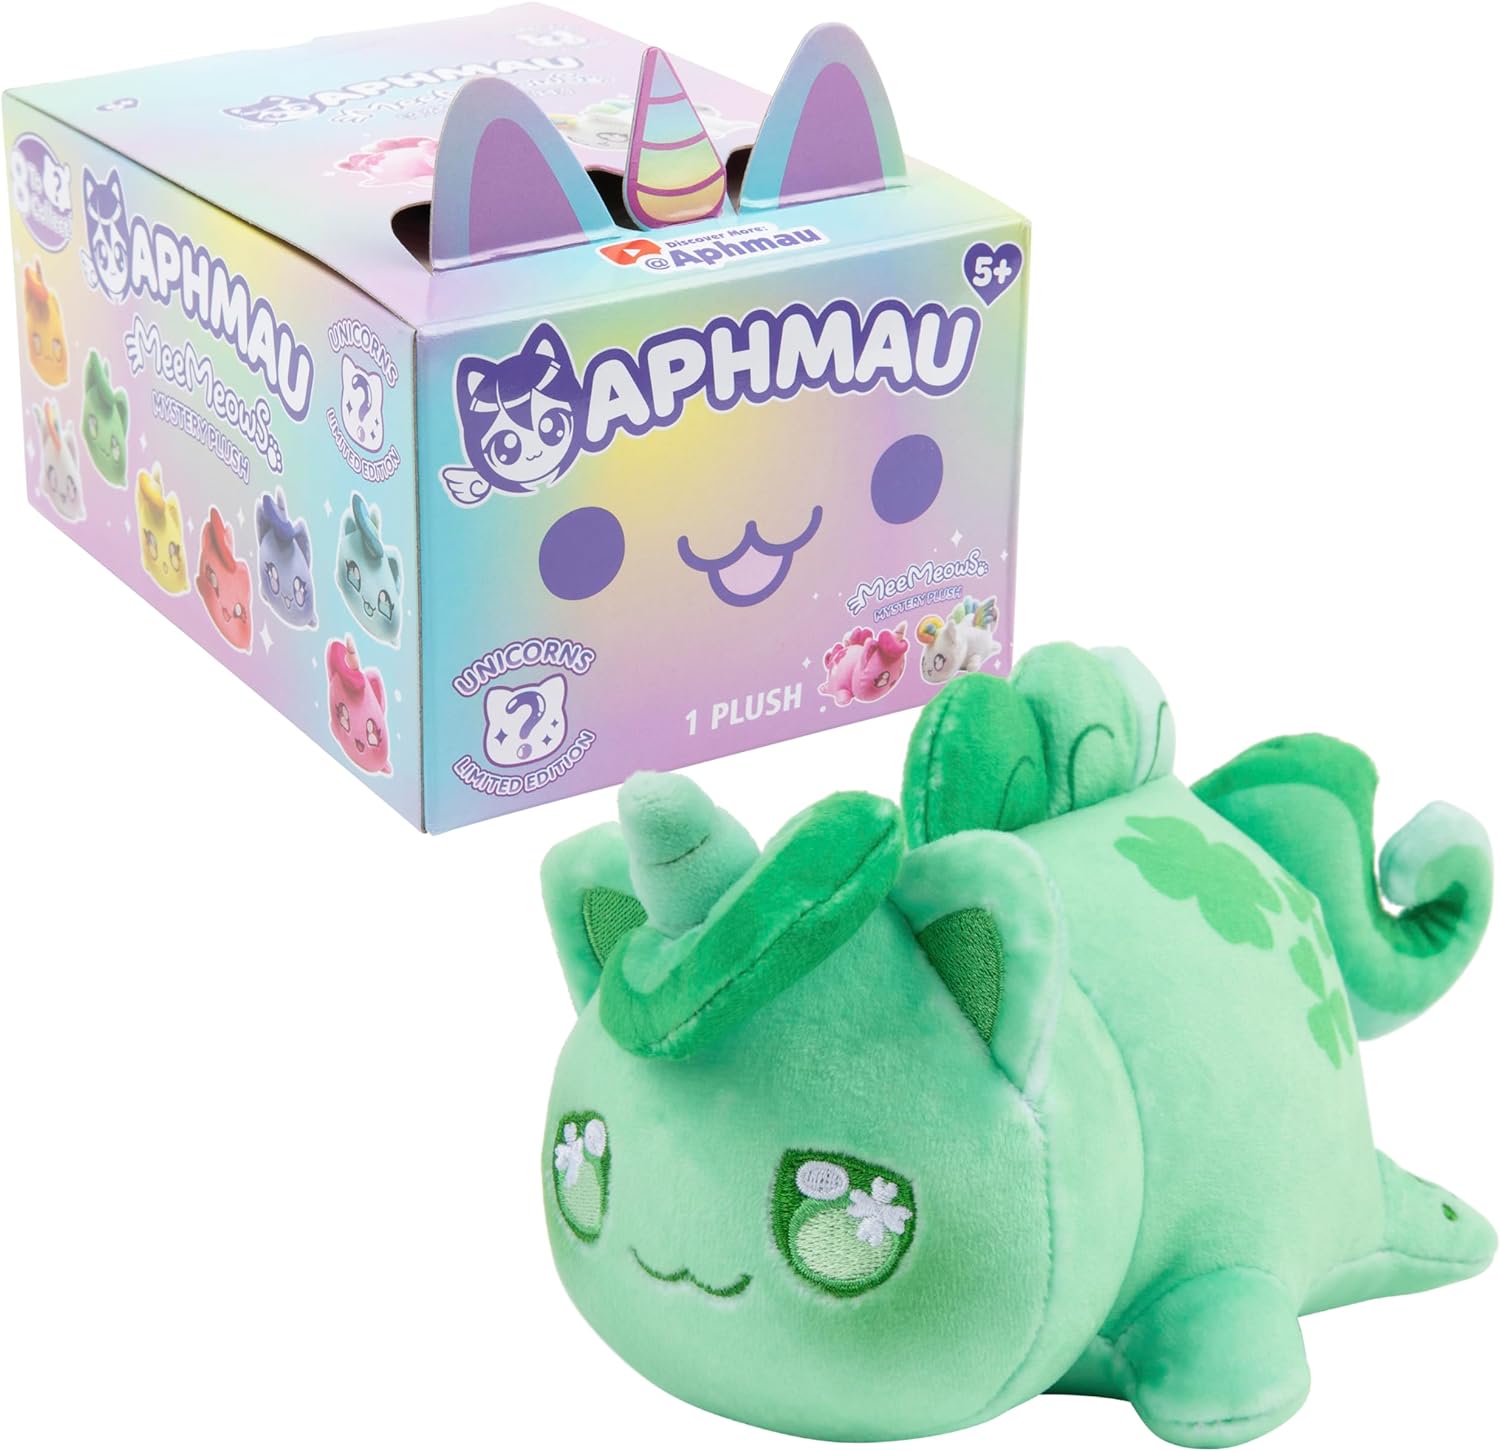 Aphmau Mystery Plush UNICORN Soft Plush Toy - one at random